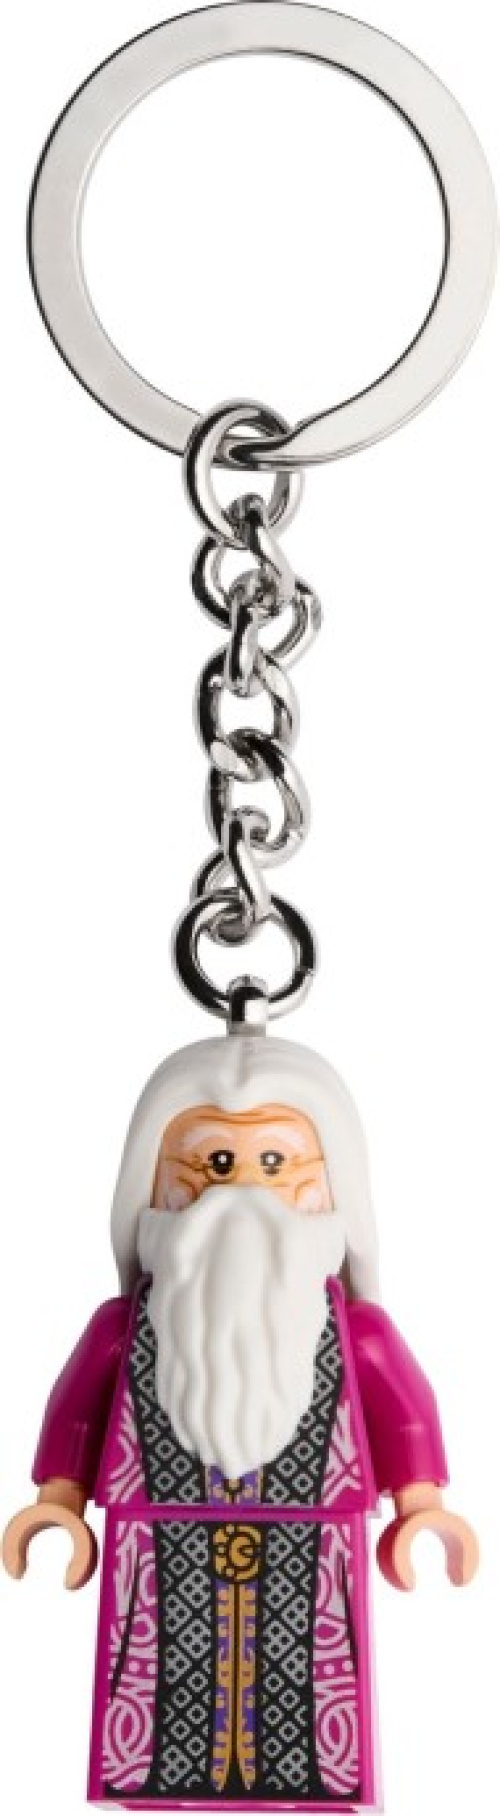 854198-1 Dumbledore Key Chain